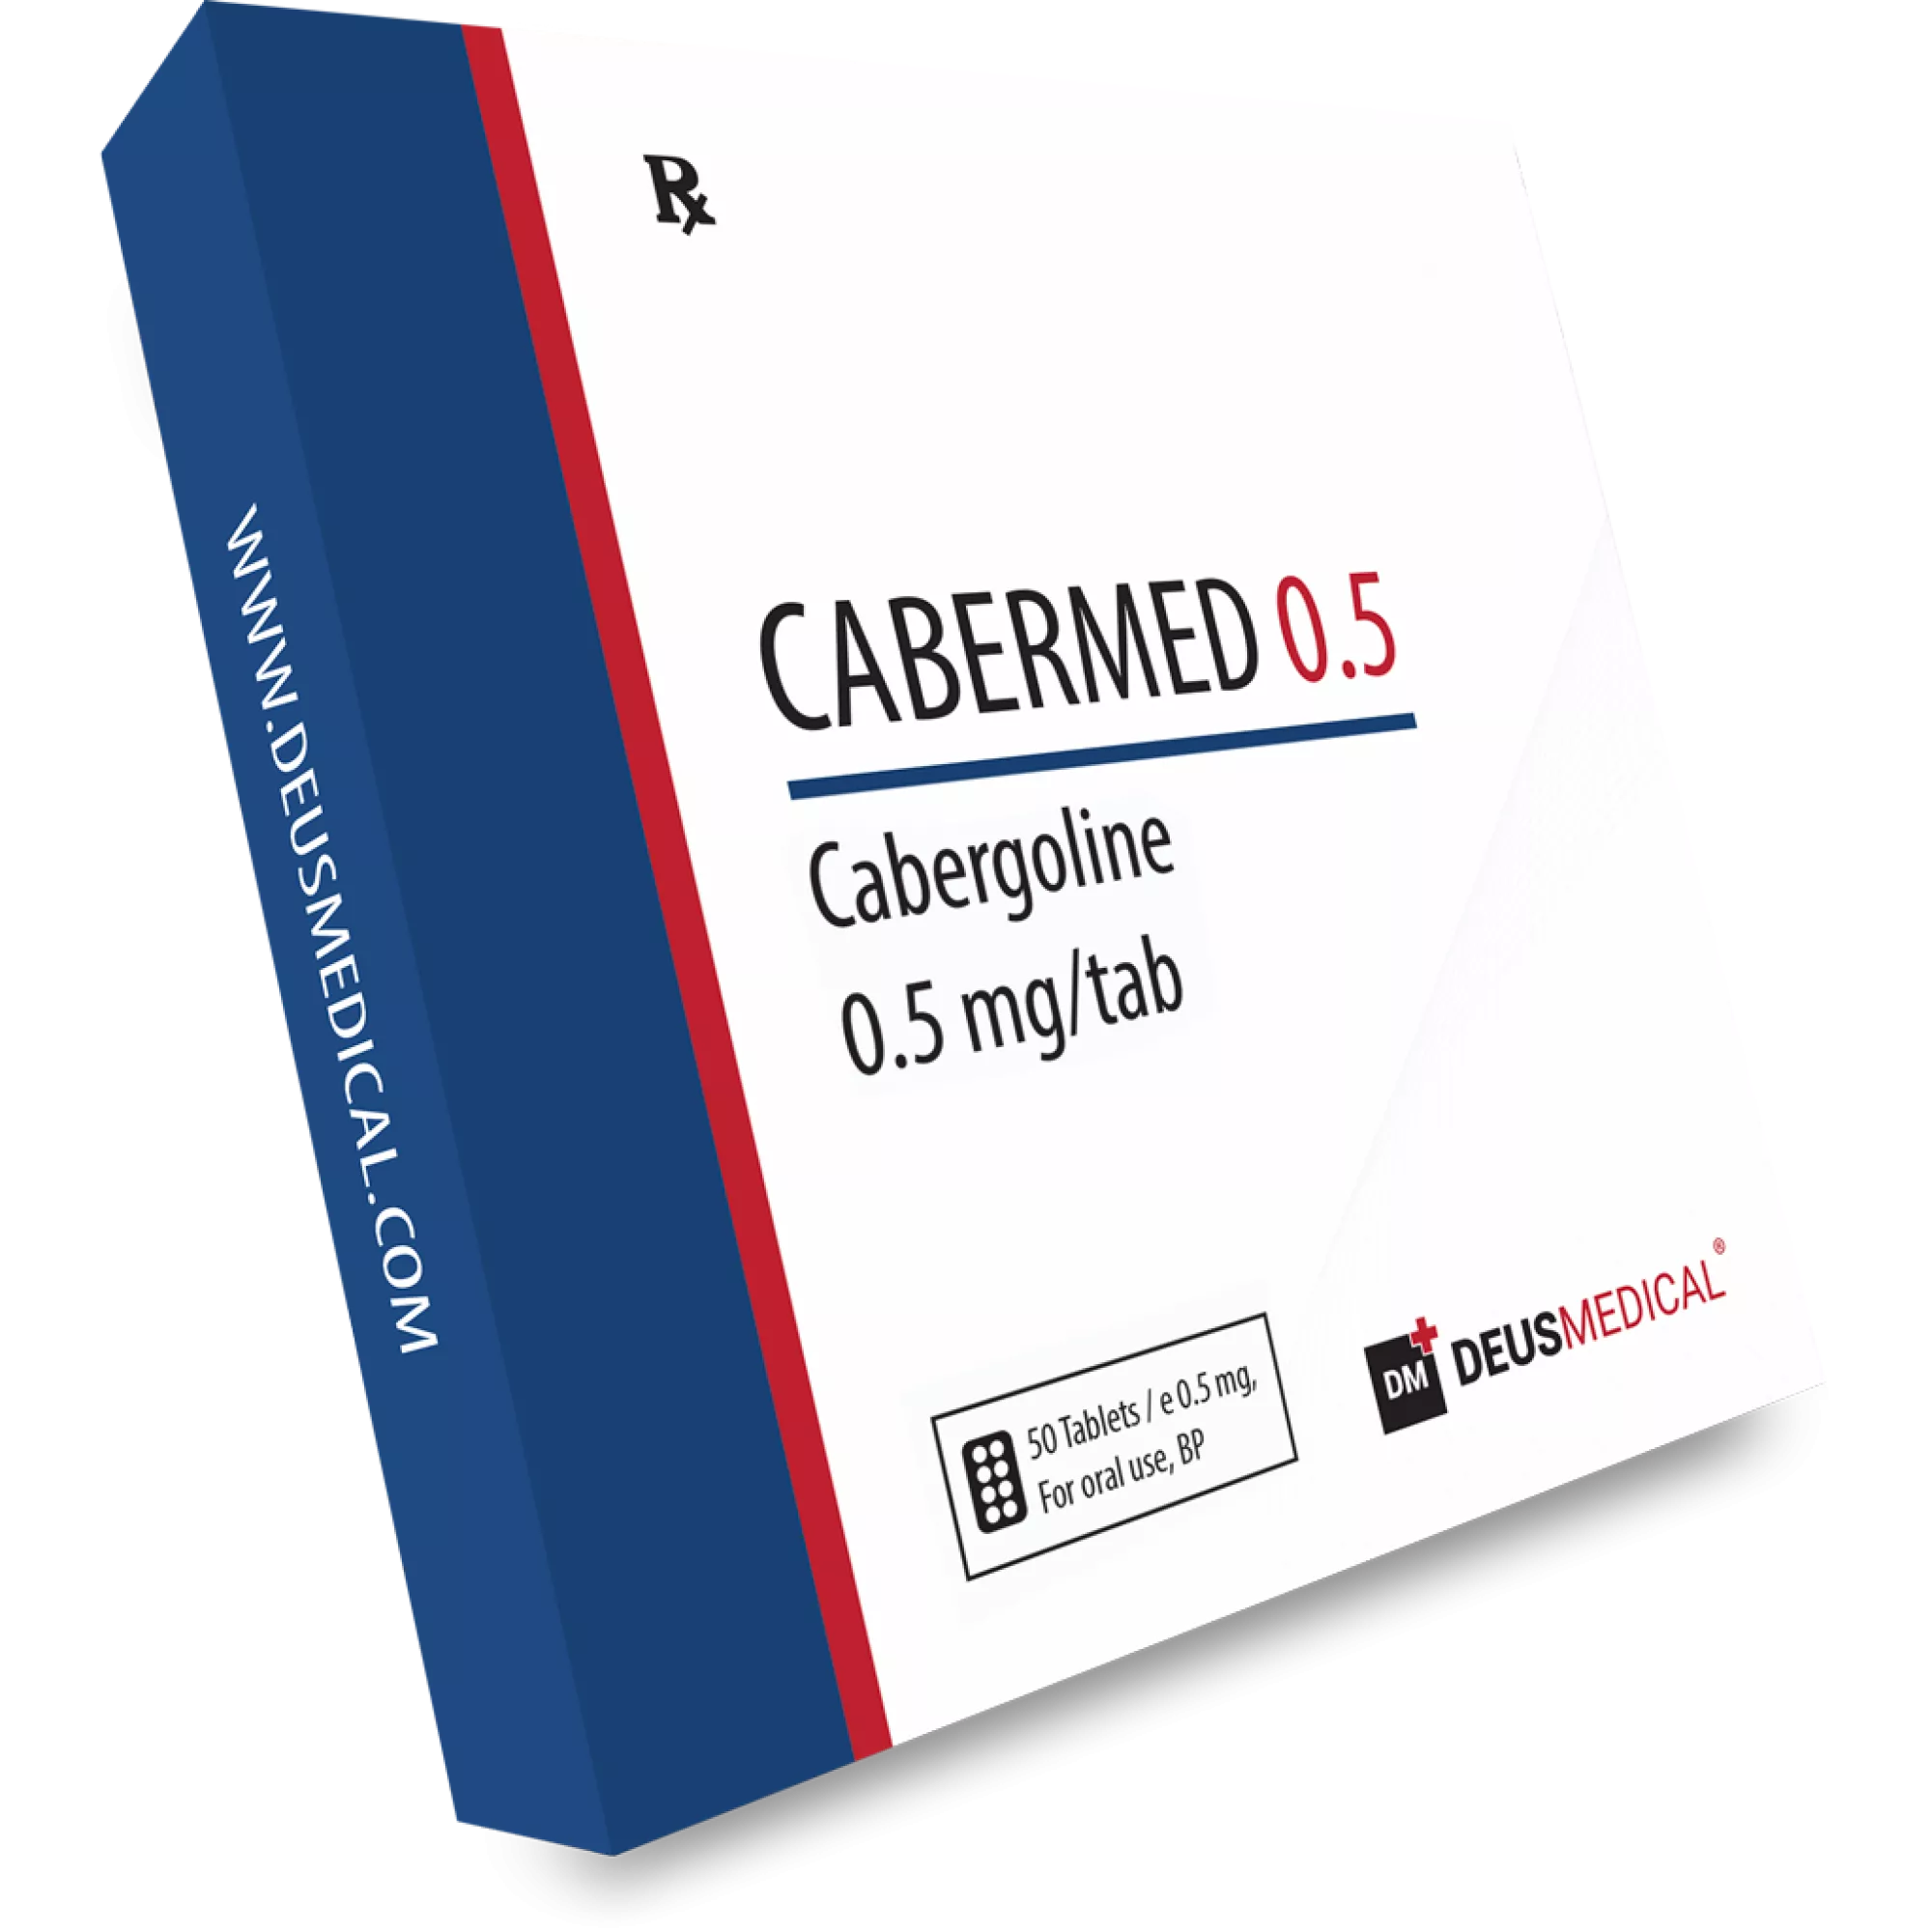 CABERMED 0.5 (kabergolin), Deus Medical, köp steroider online - www.deuspower.shop